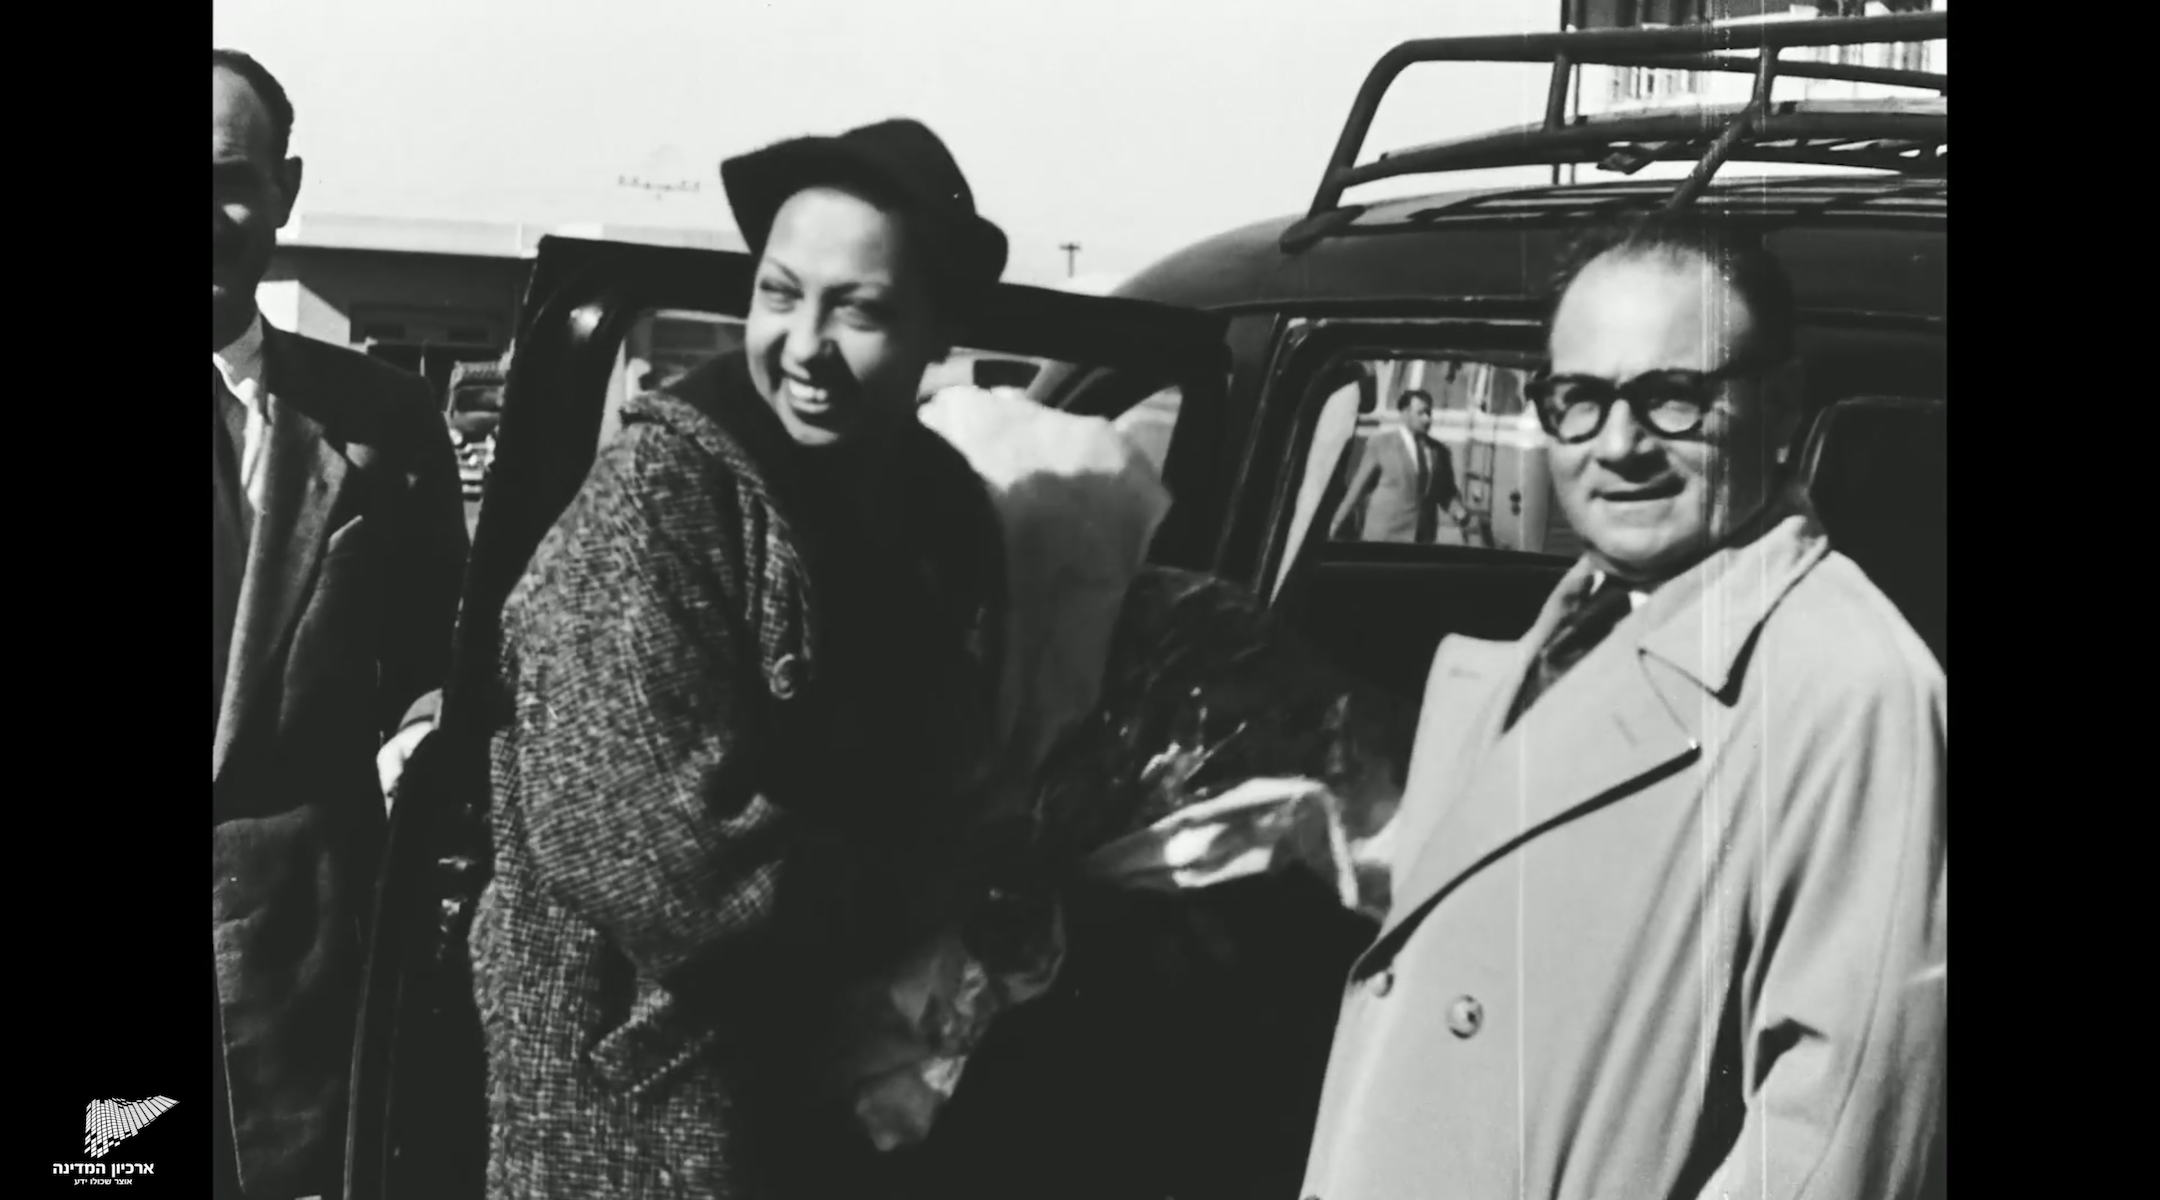 Josephine Baker climbs into a car next to an Israeli official